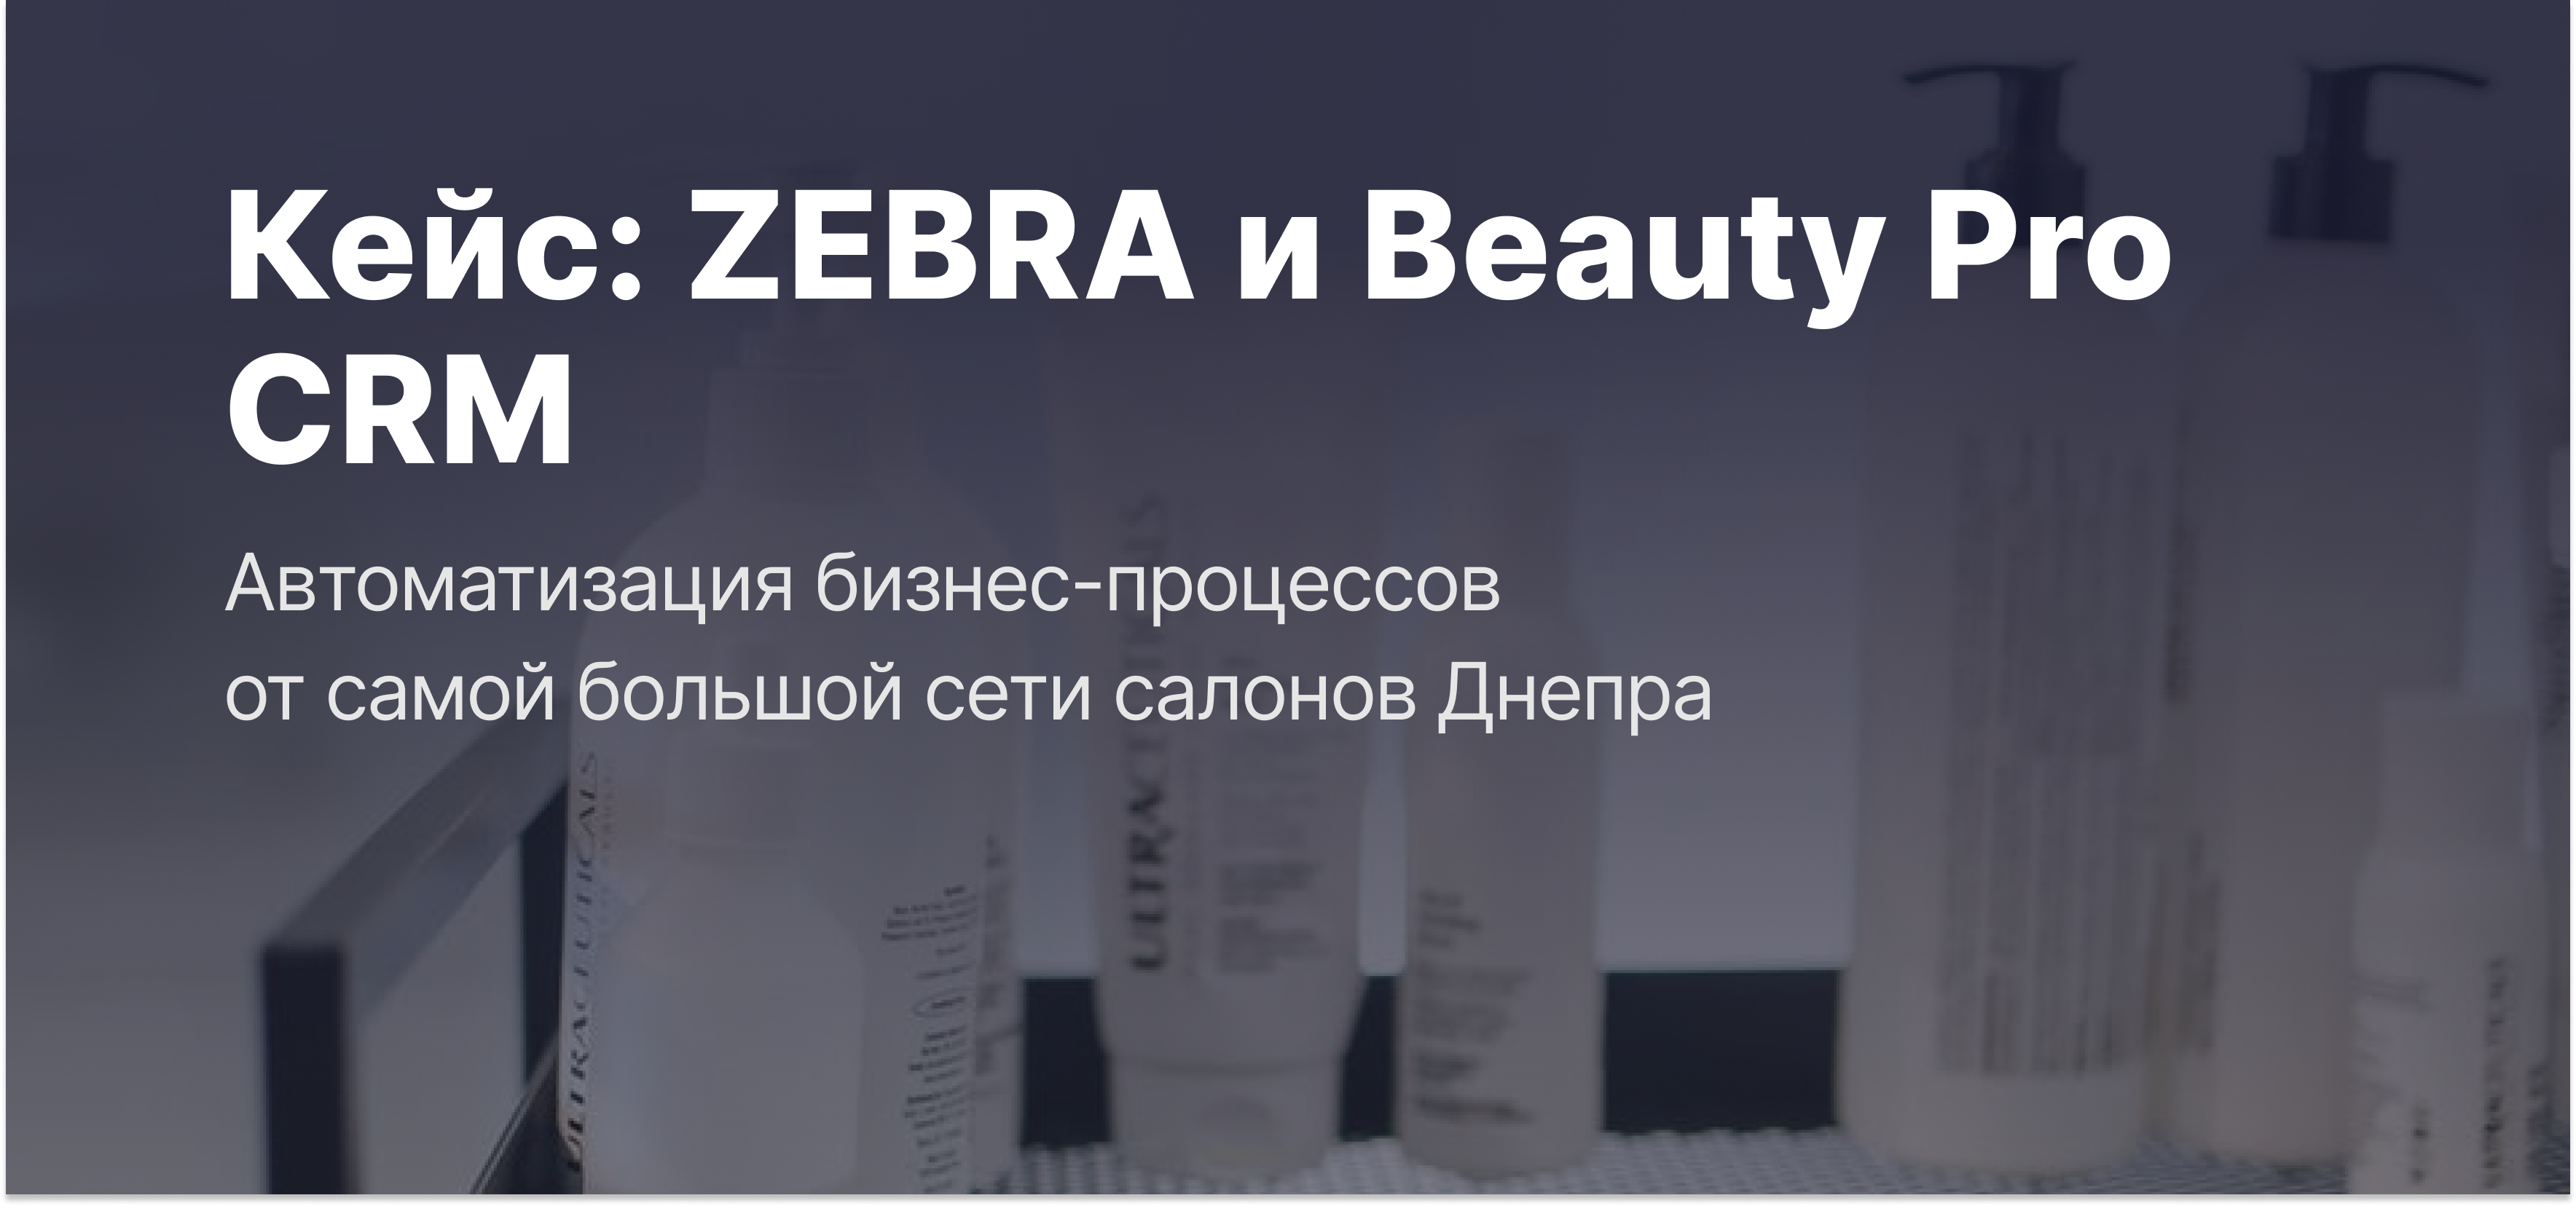 Кейс ZEBRA и Beauty Pro CRM: Автоматизация бизнес-процессов от крупнейшей сети Днепра